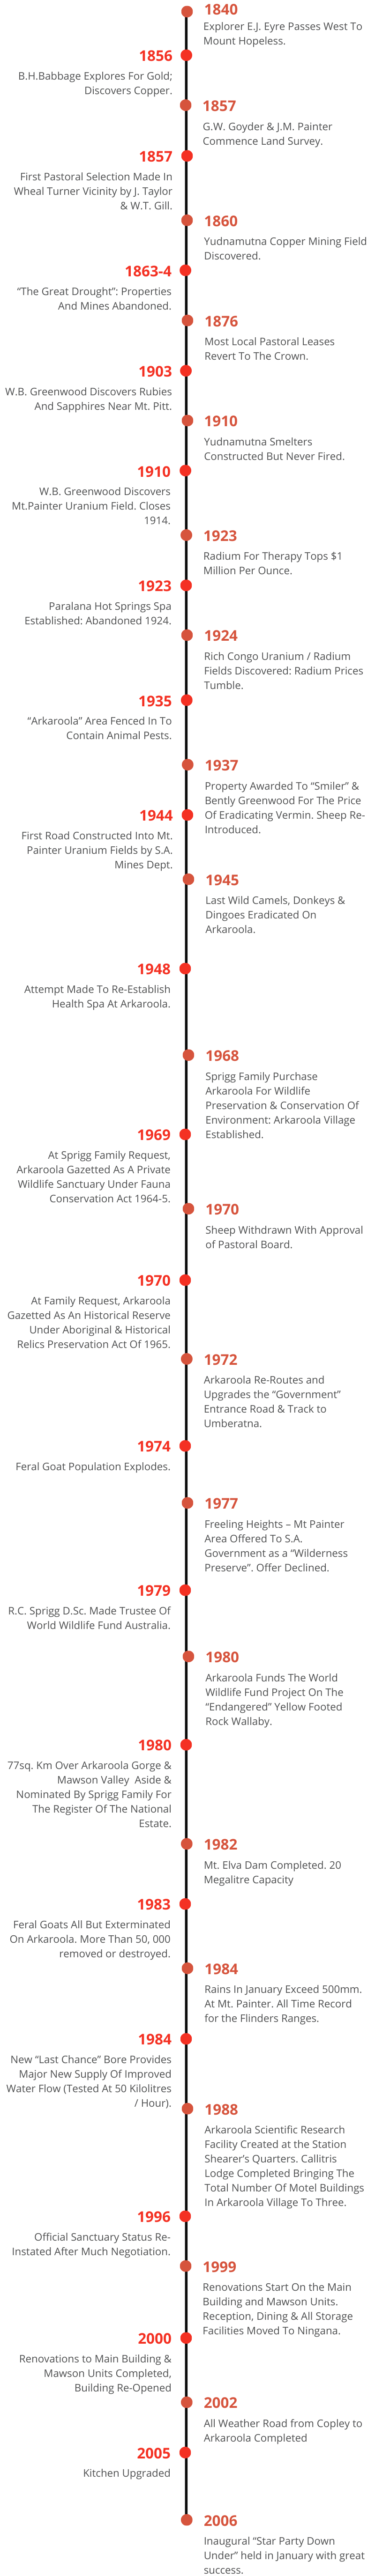 Timeline of Arkaroola Wilderness Sanctuary